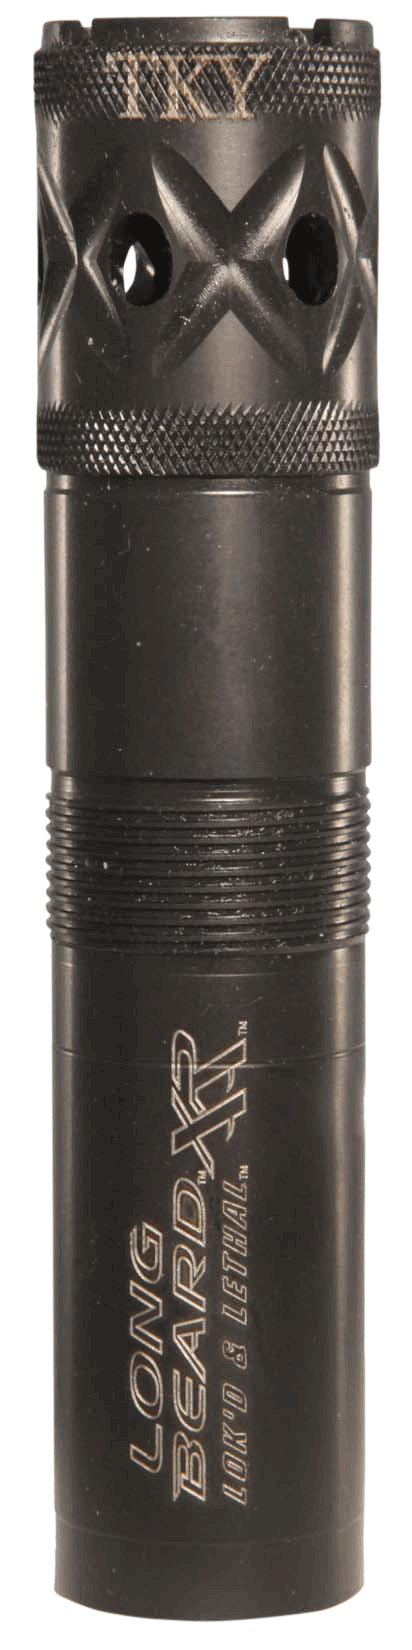 Carlsons 70150 Long Beard Turkey Benelli Crio Plus 12 Gauge 17-4 Stainless Steel Black Ported